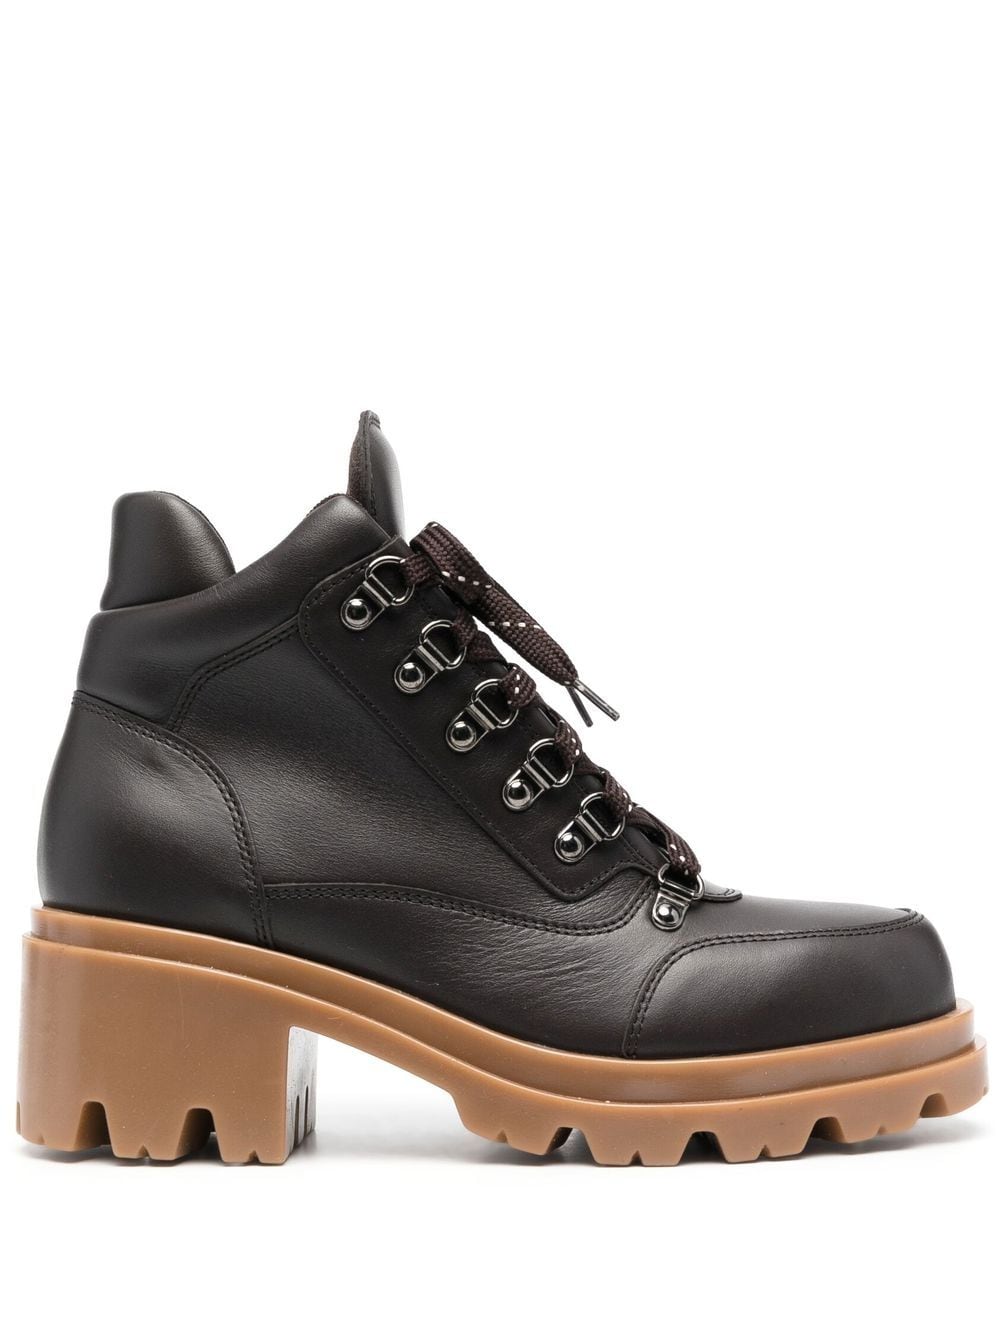 Emporio Armani Chalet Collection 65mm hiking boots - Brown von Emporio Armani